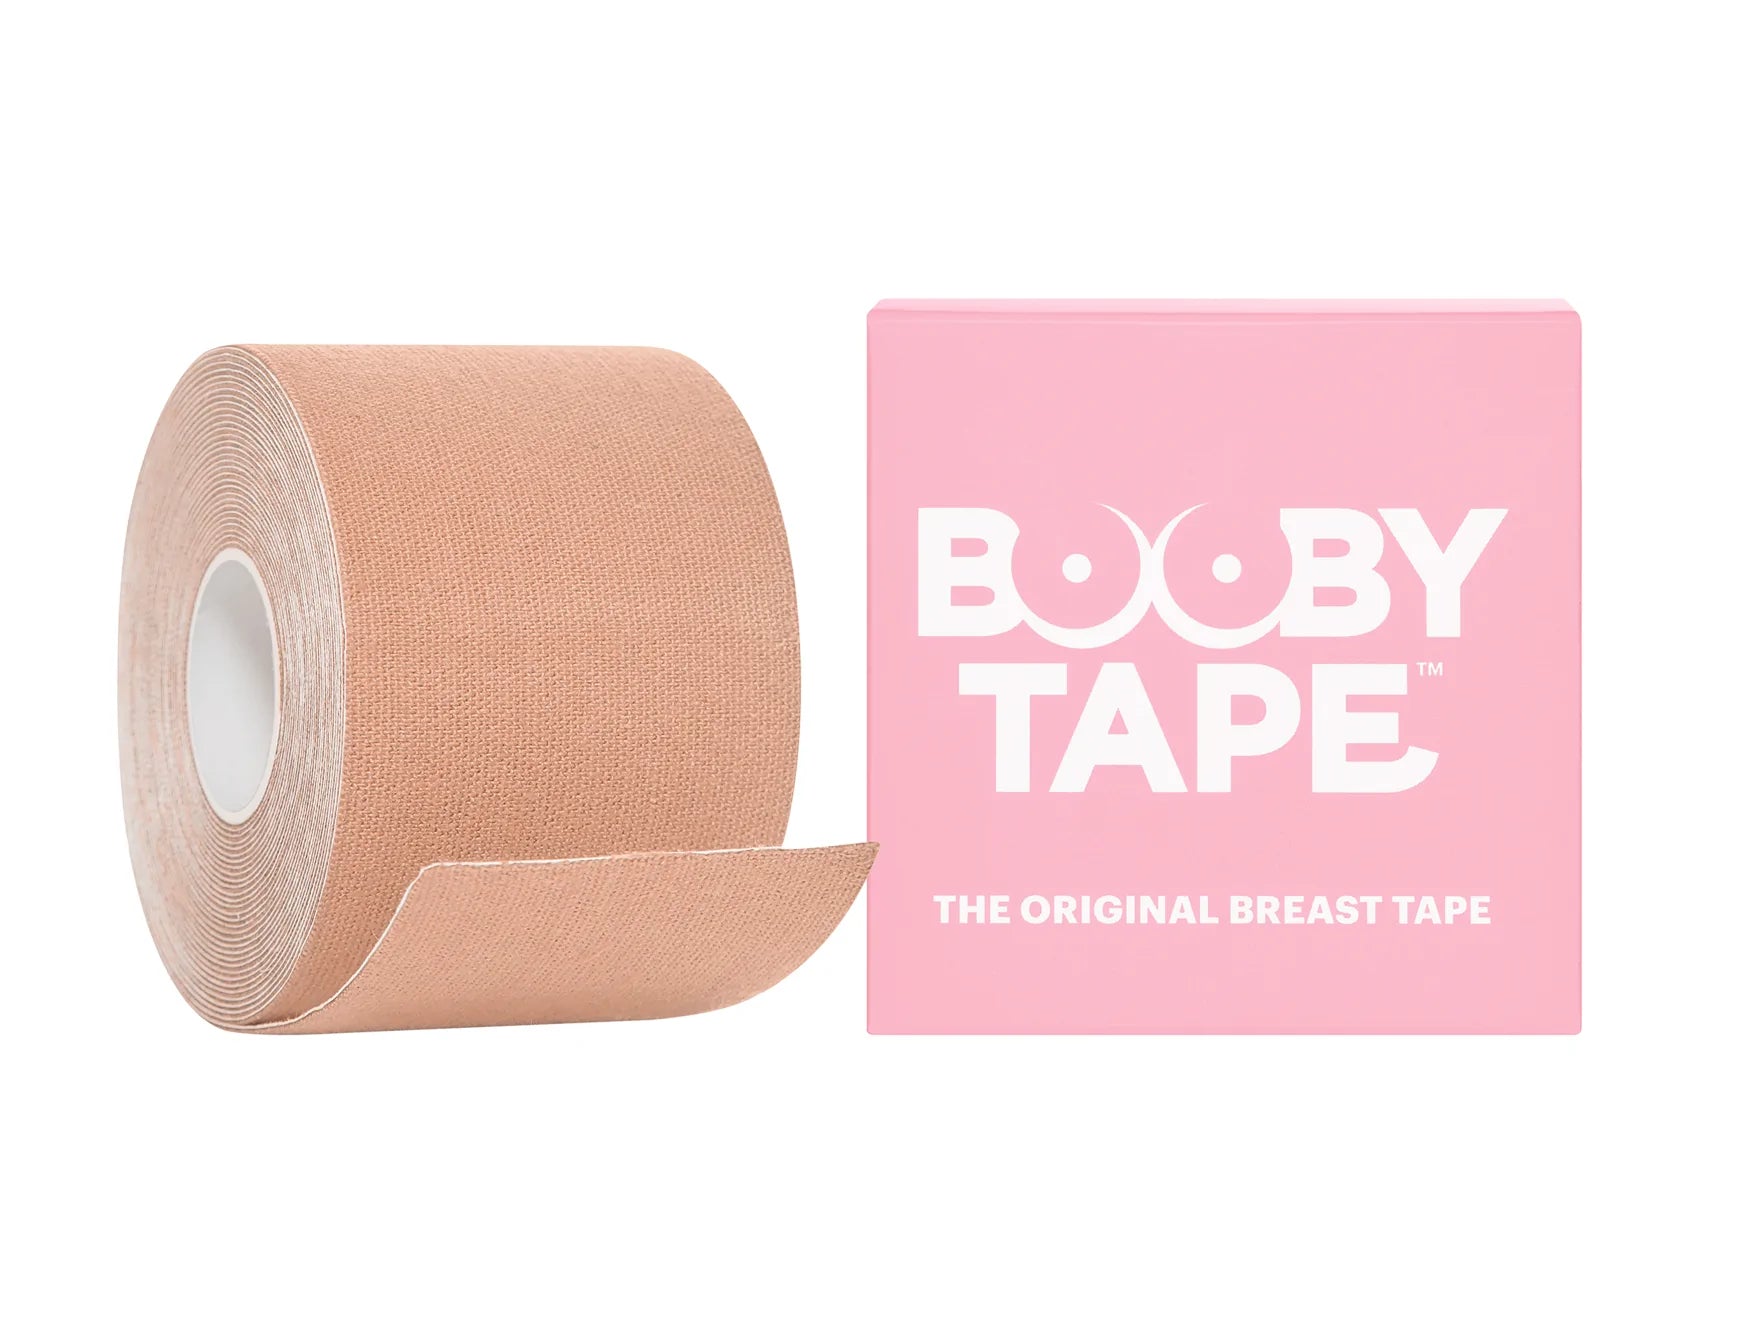 Booby Tape Original Breast Tape